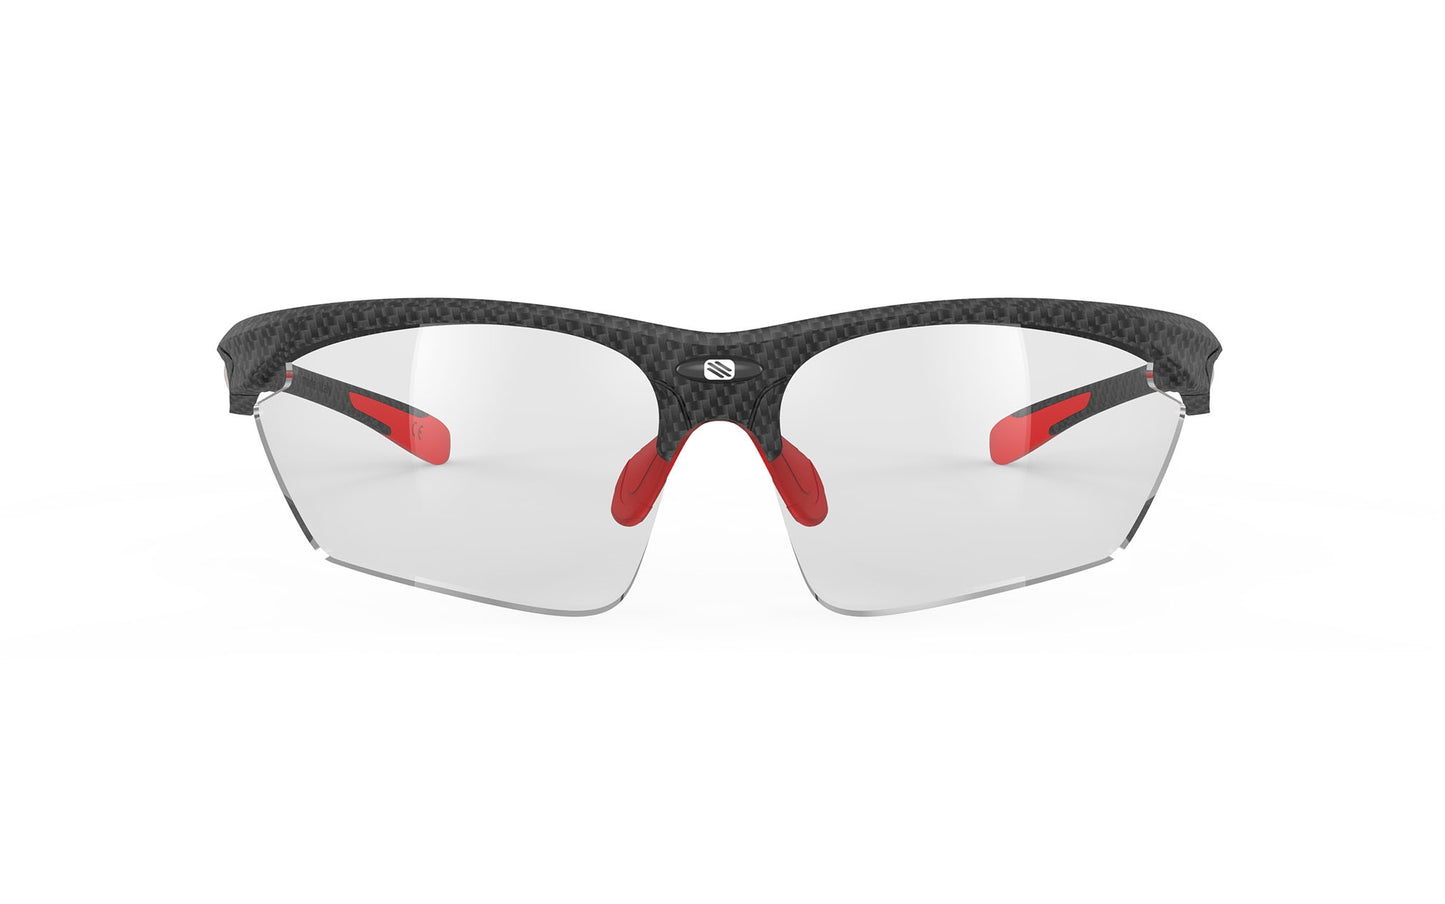 Rudy Project Stratofly Carbonium - Impactx Photochromic 2 Black Sunglasses